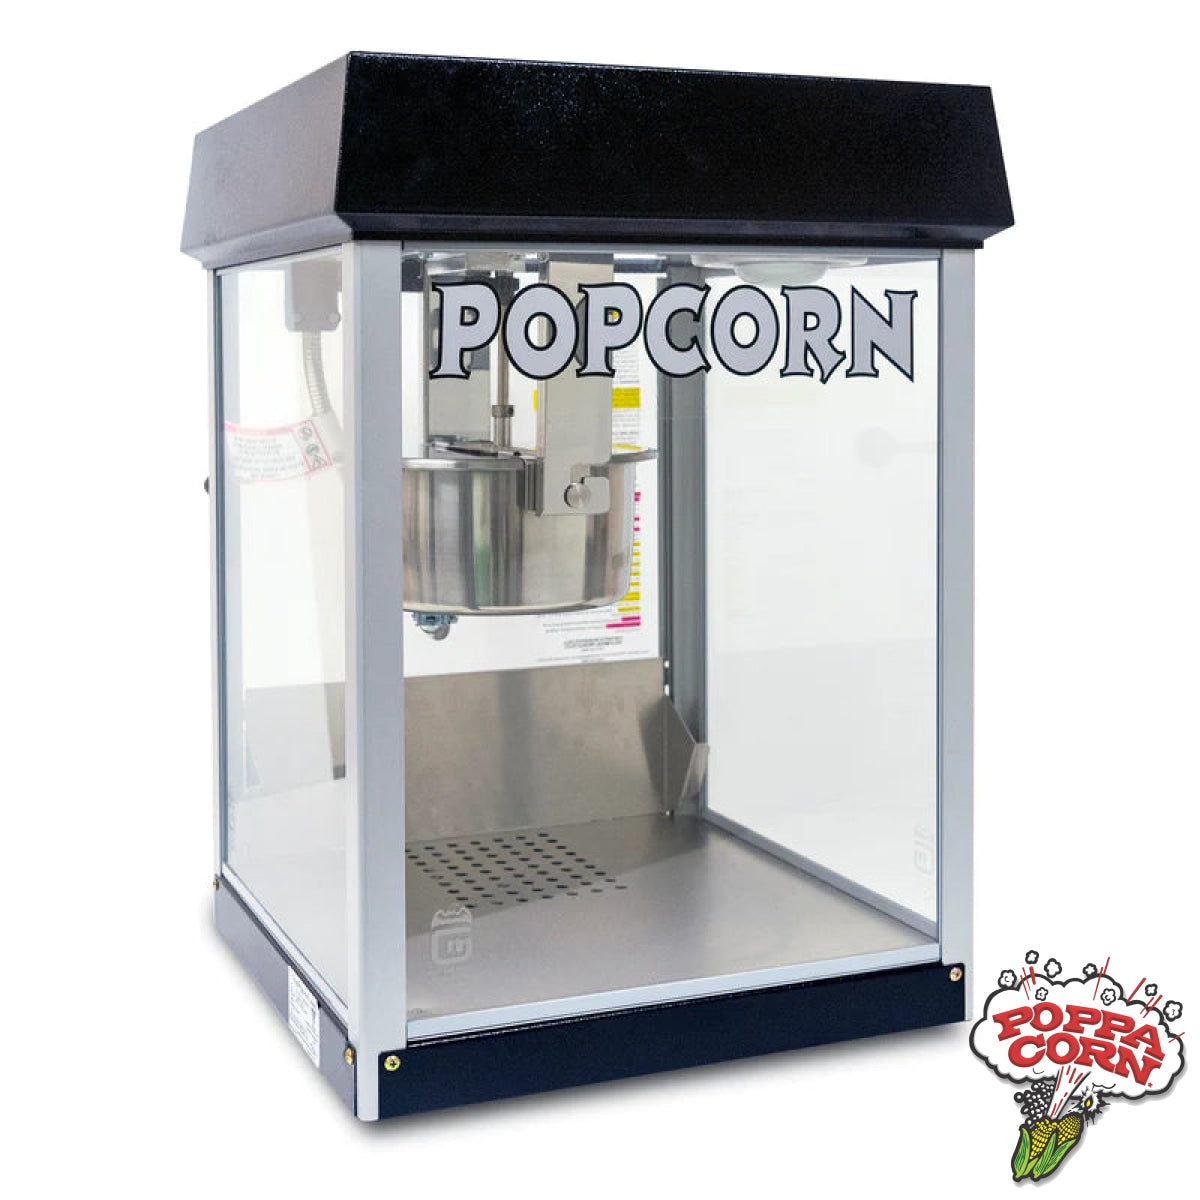 Black Fun Pop 4-oz. Popcorn Machine - GM2404MD - Poppa Corn Corp